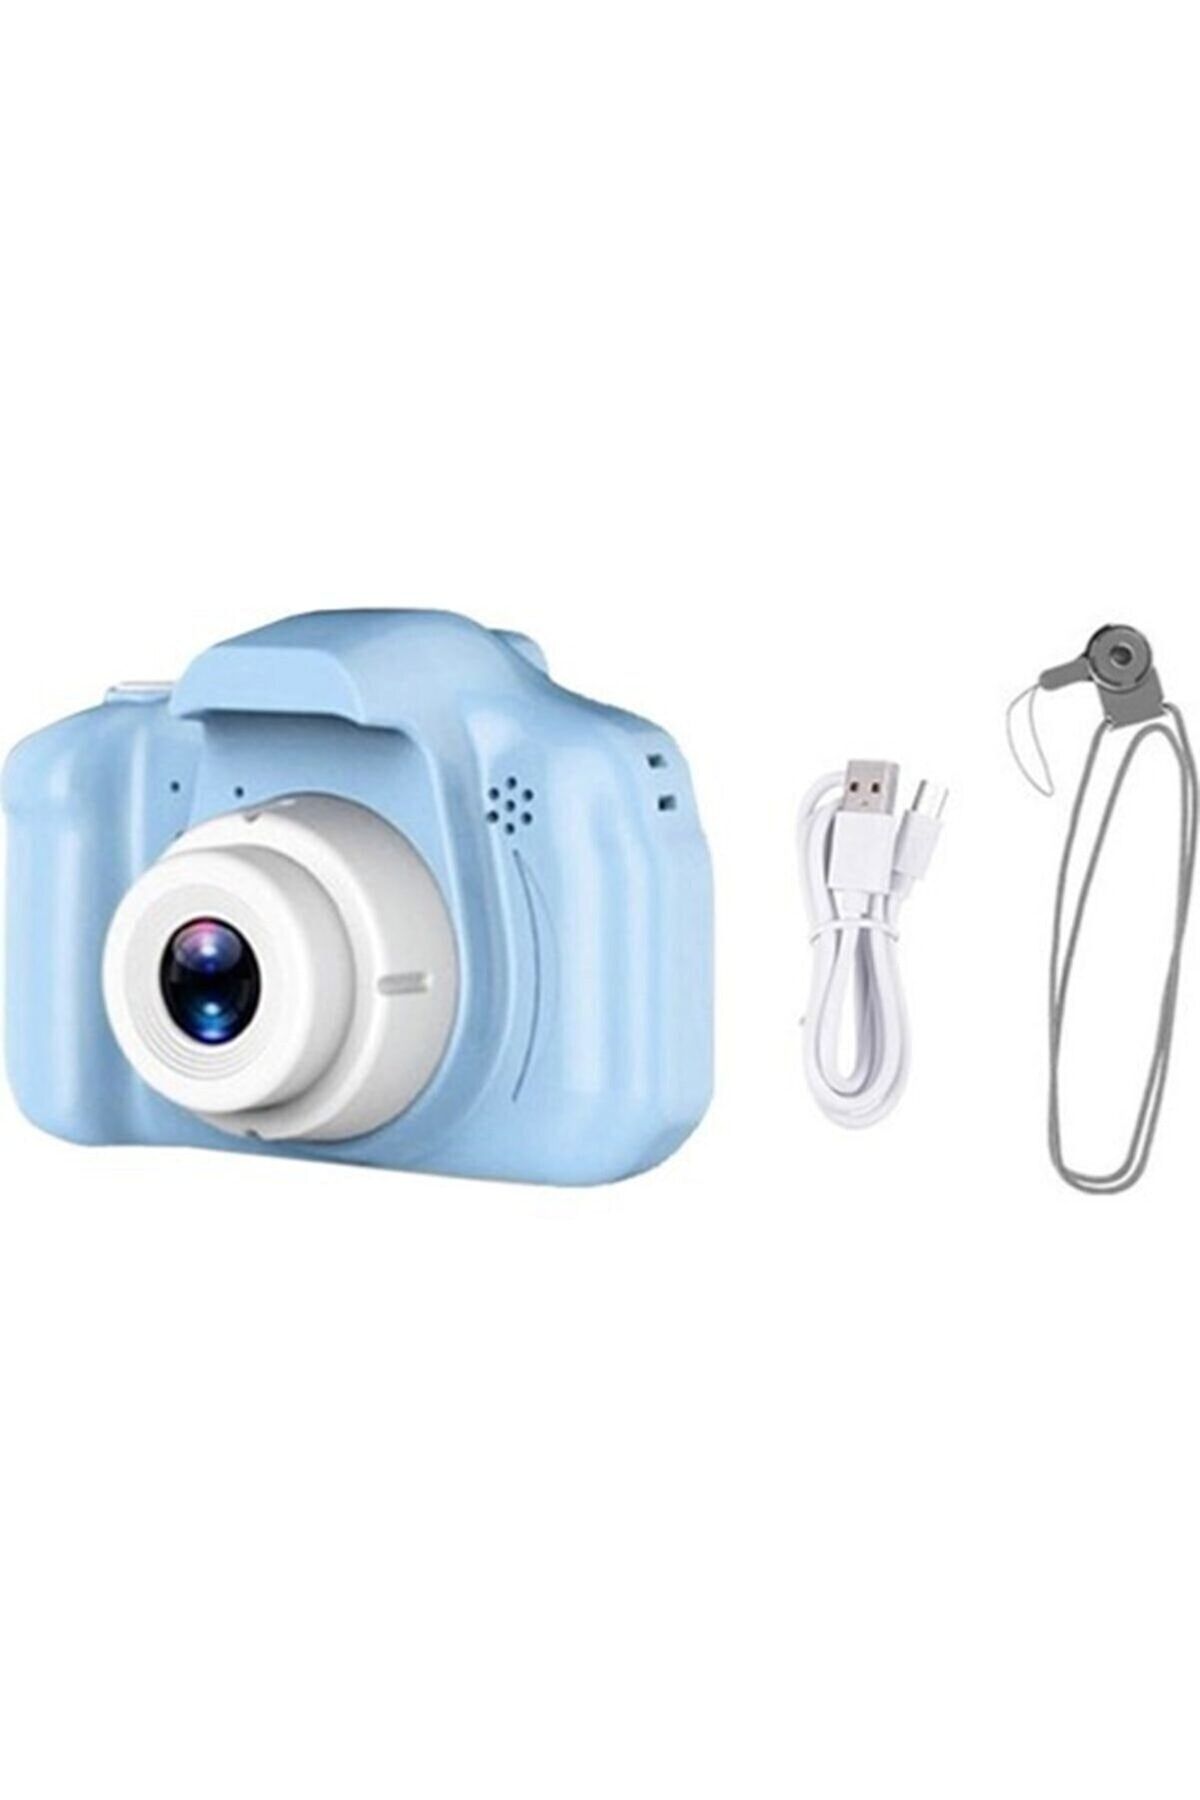 omni Mavi Renk Mini 1080p Hd Çocuk Kamera Dijital Fotoğraf Makinesi 2.0 Inç Ekran